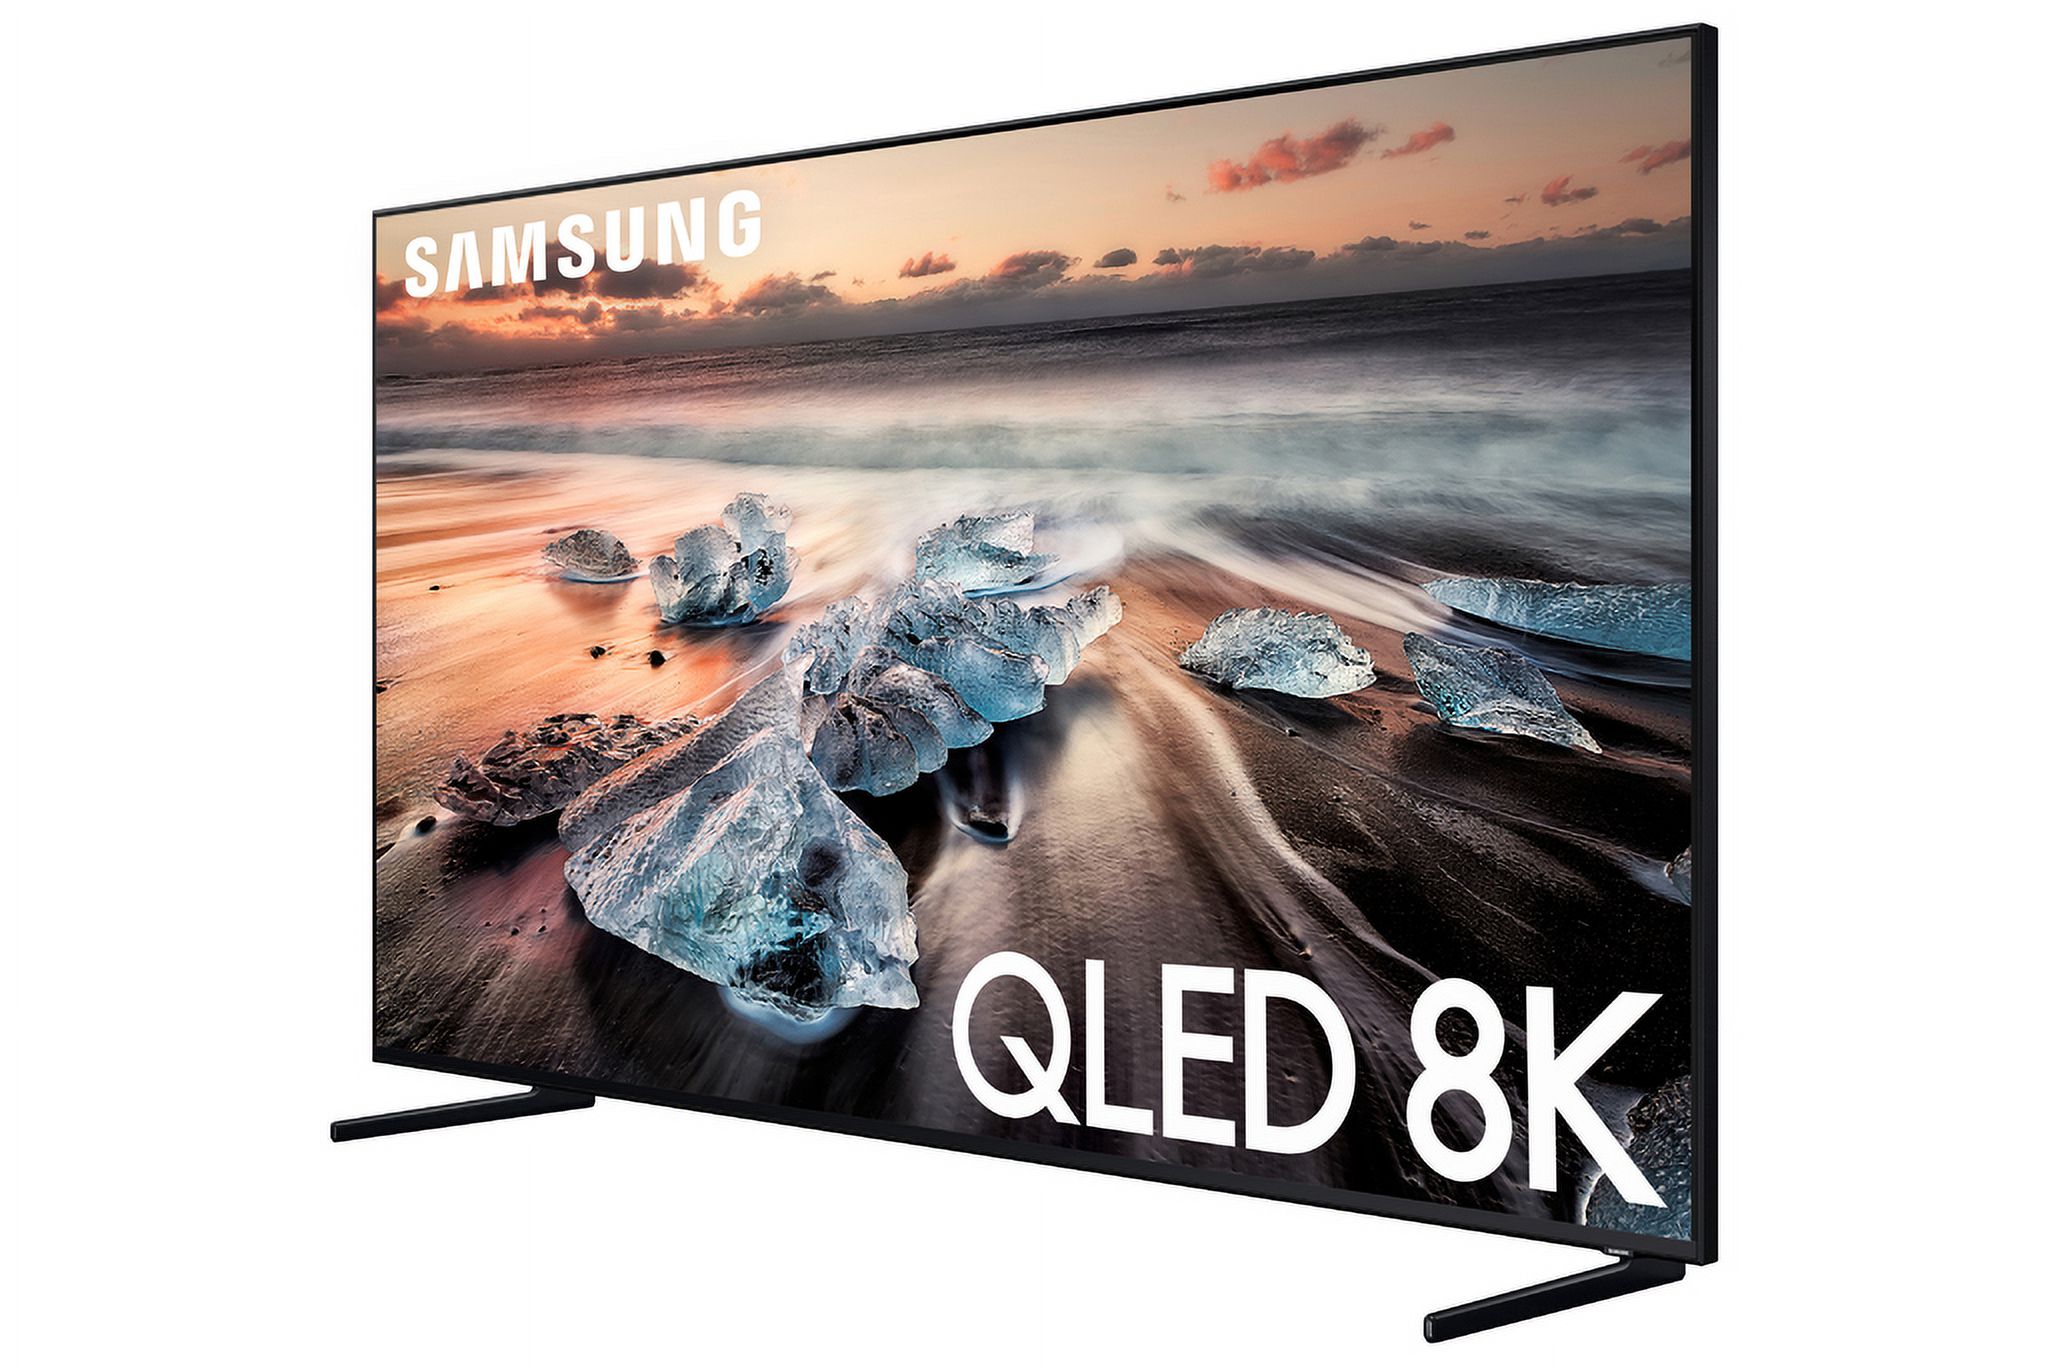 SAMSUNG 82 Inch Class 8K Ultra HD (4320P) HDR Smart QLED TV QN82Q900R (2019 Model) - image 4 of 24